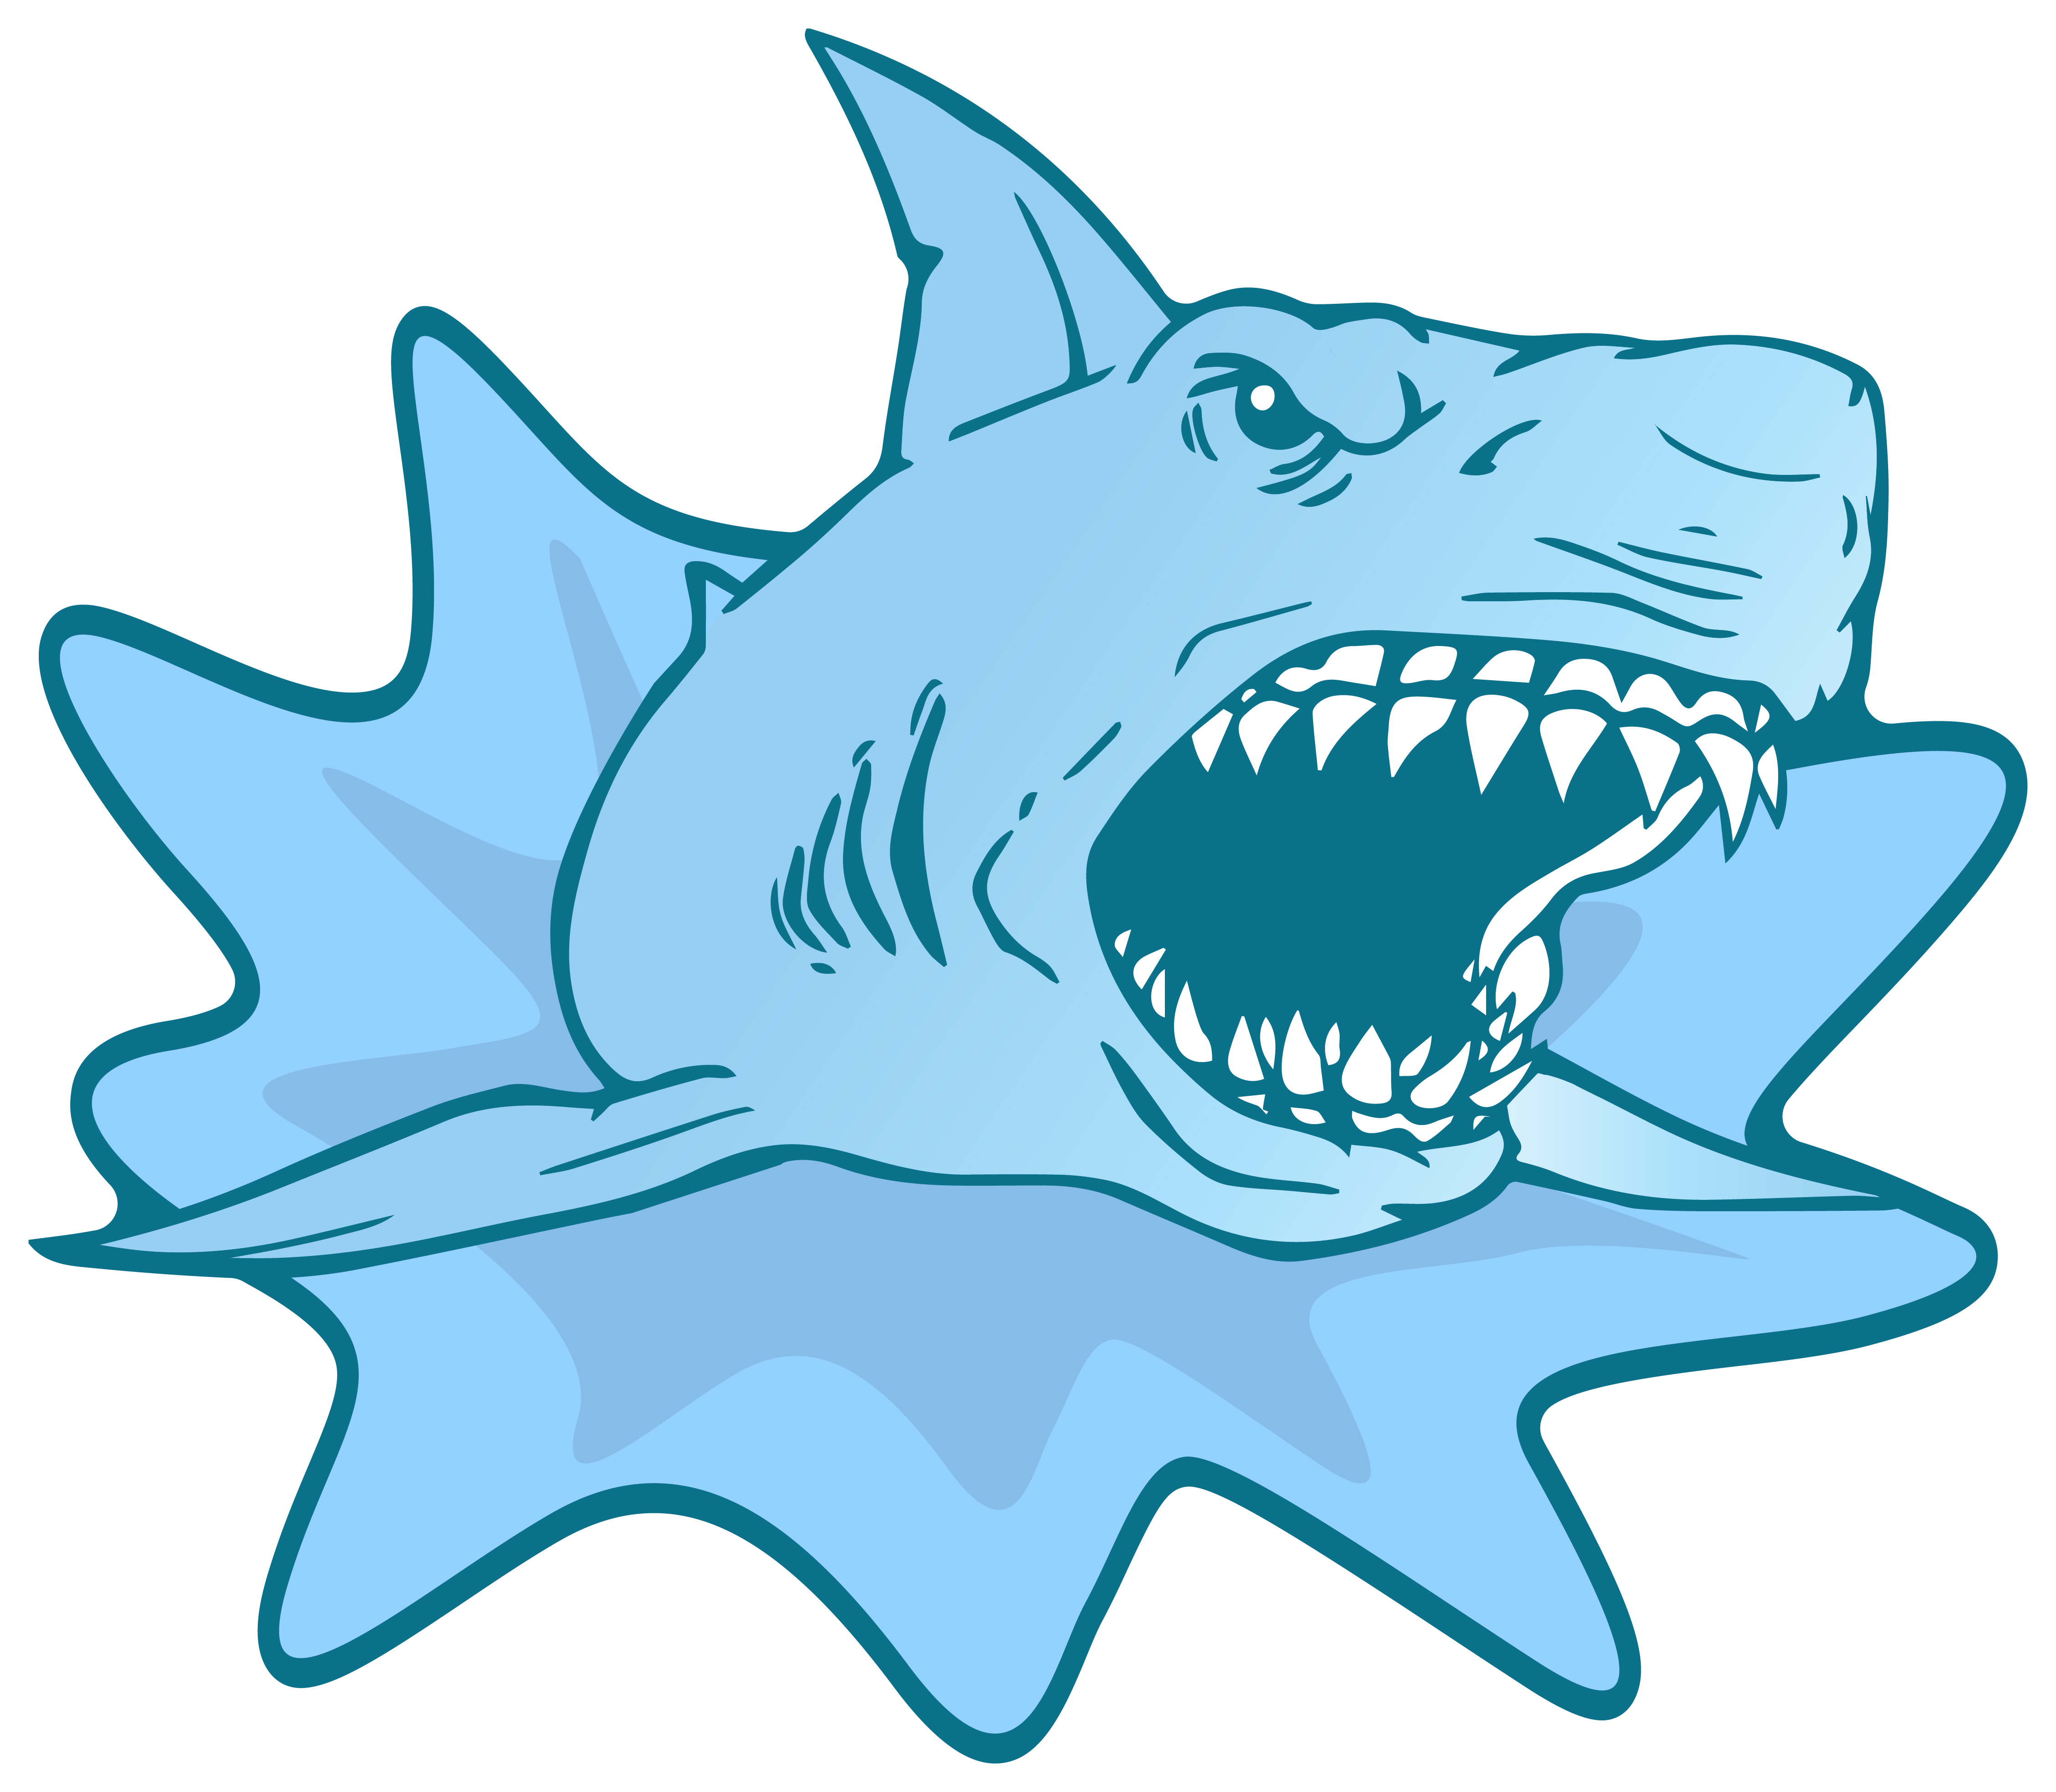 4x Aufkleber Shark Hai 5x5 cm für Auto KFZ Handy Laptop Haifisch hellblau